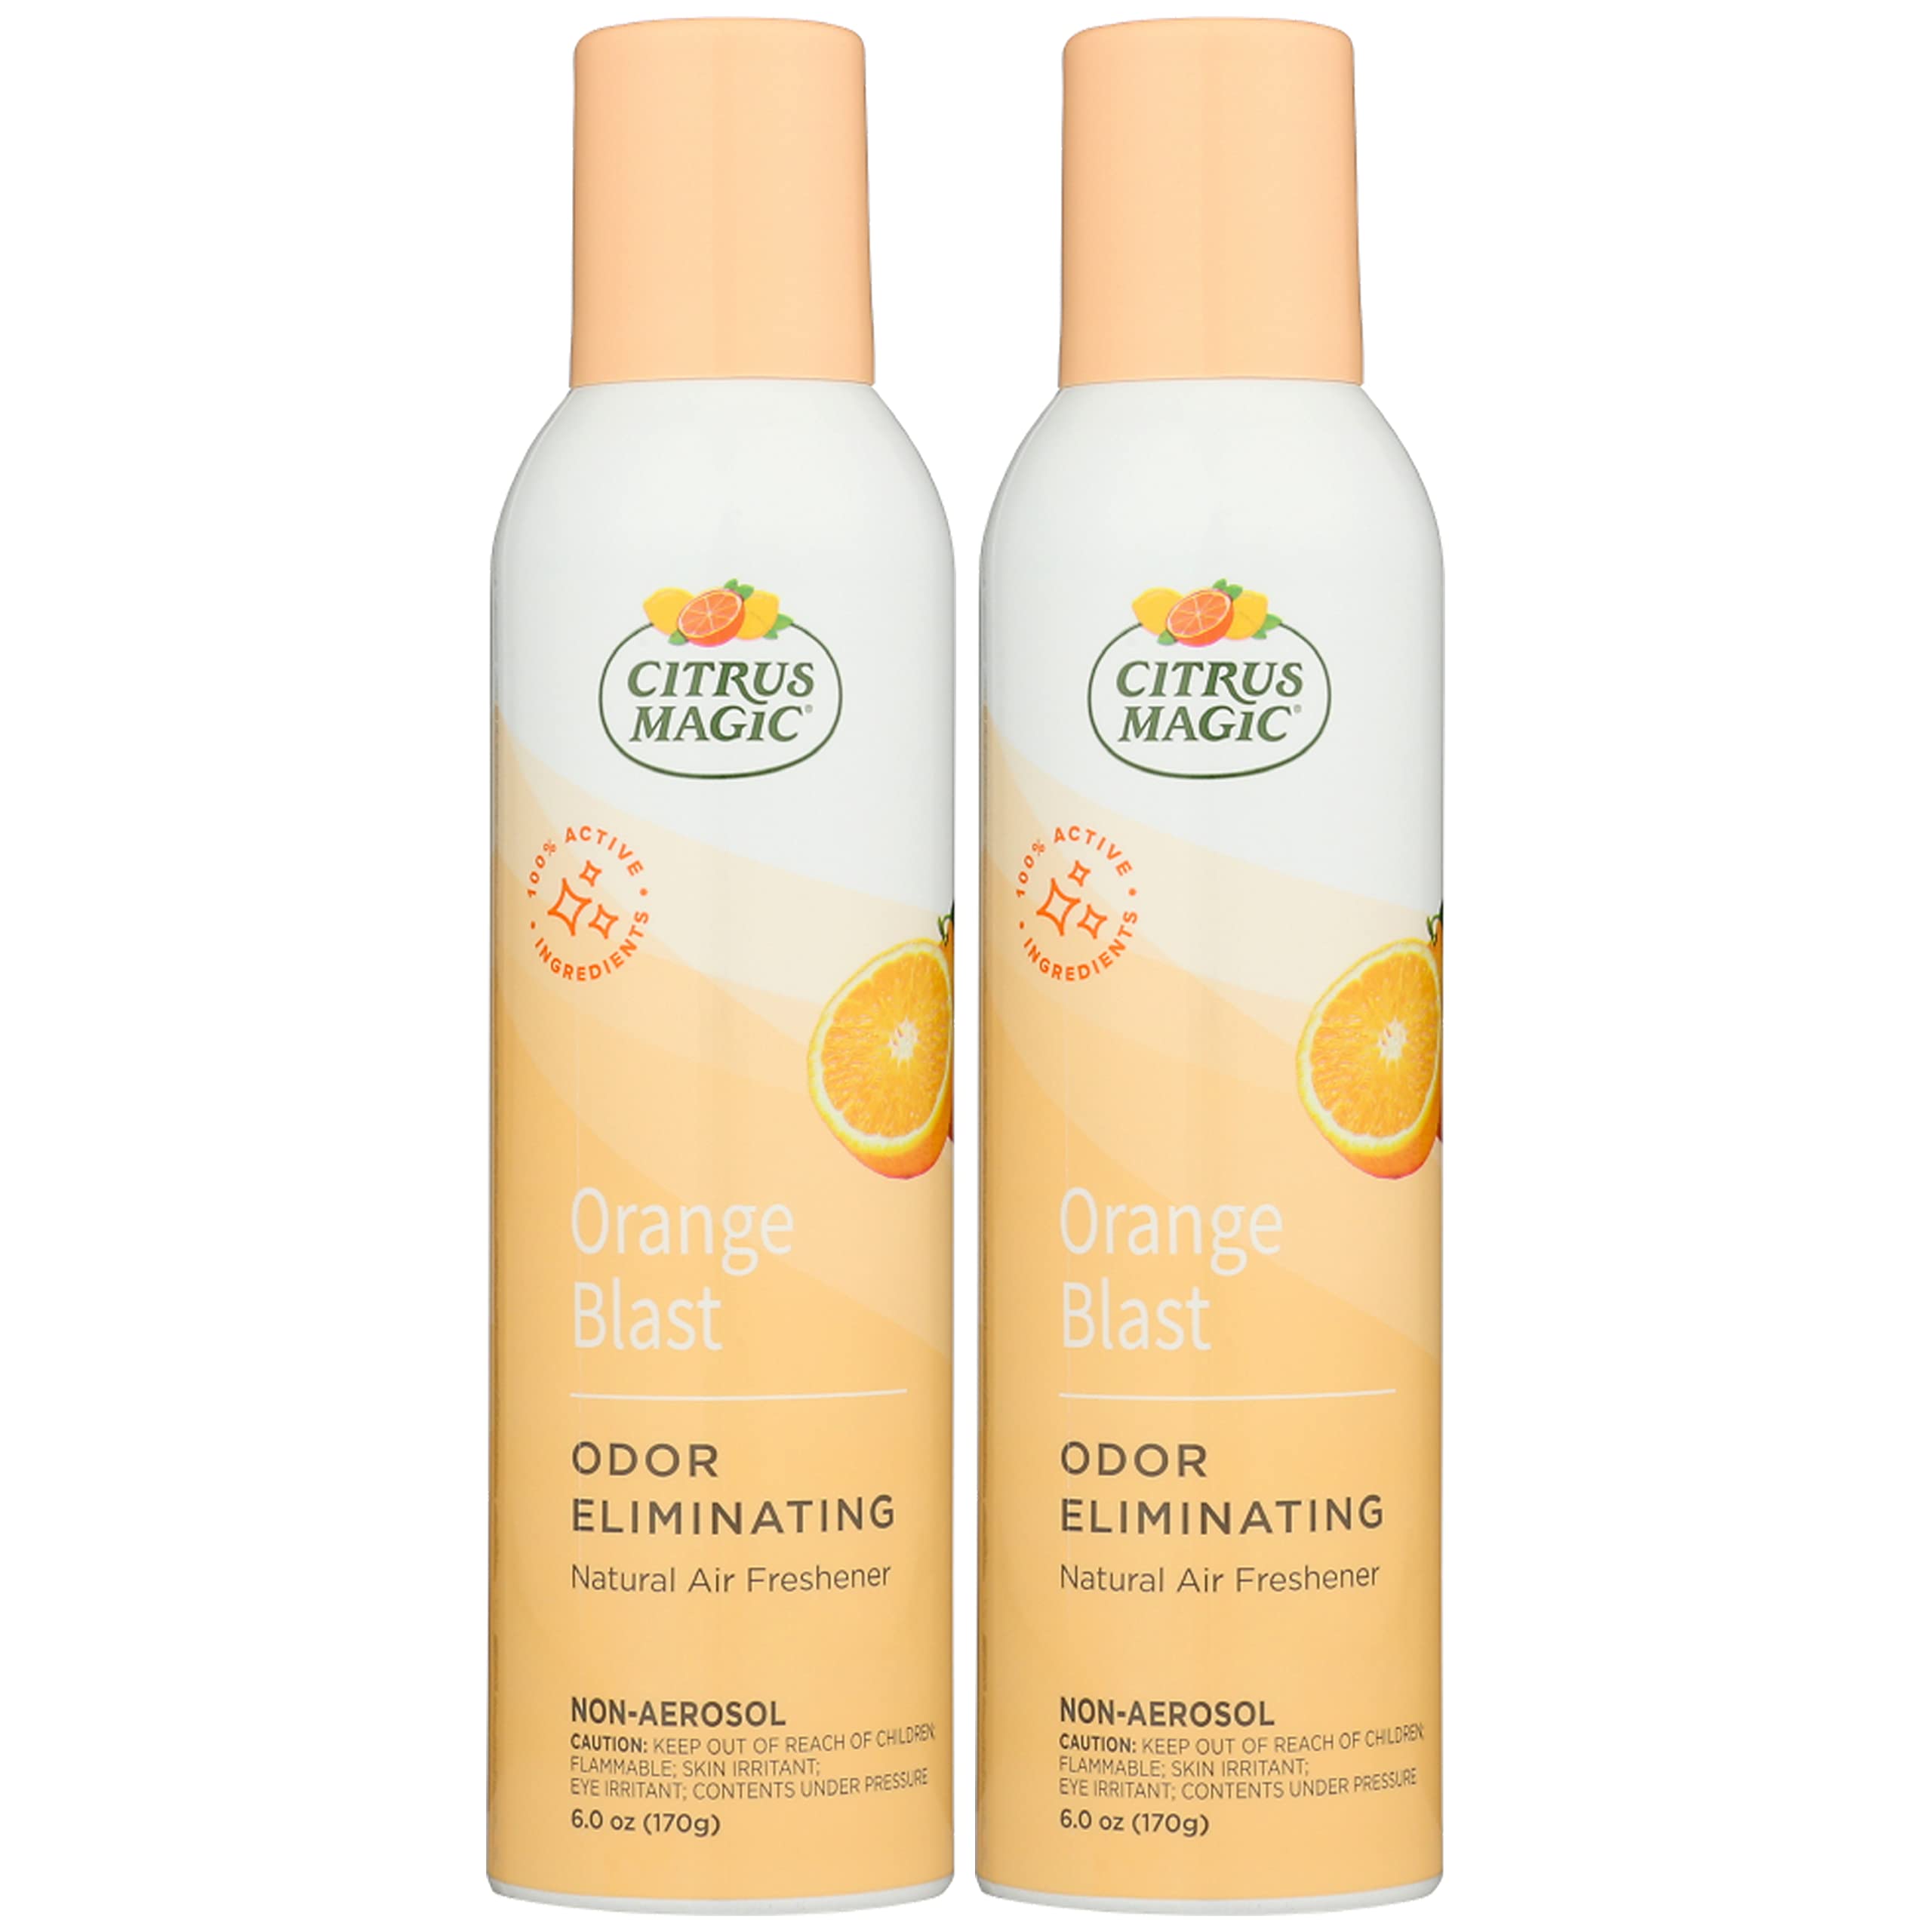 Citrus Magic Natural Odor Eliminating Air Freshener Spray, Orange Blast 6 ounce pack of 2 - $11.96 at Amazon